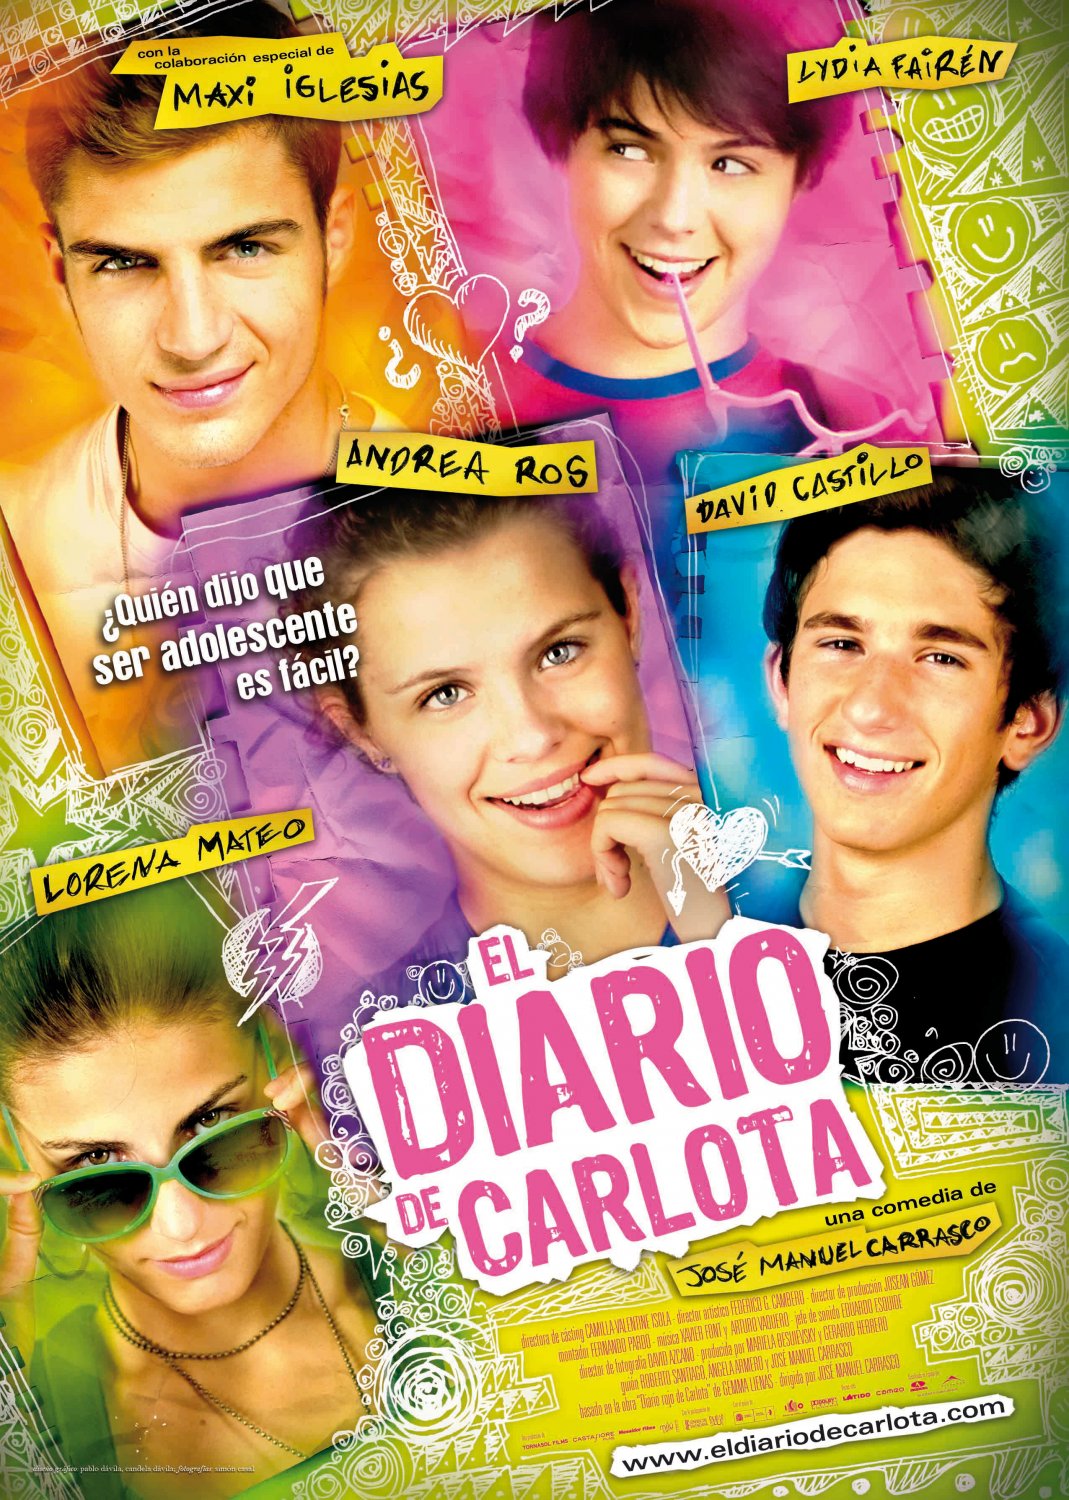 Extra Large Movie Poster Image for El diario de Carlota (#1 of 2)